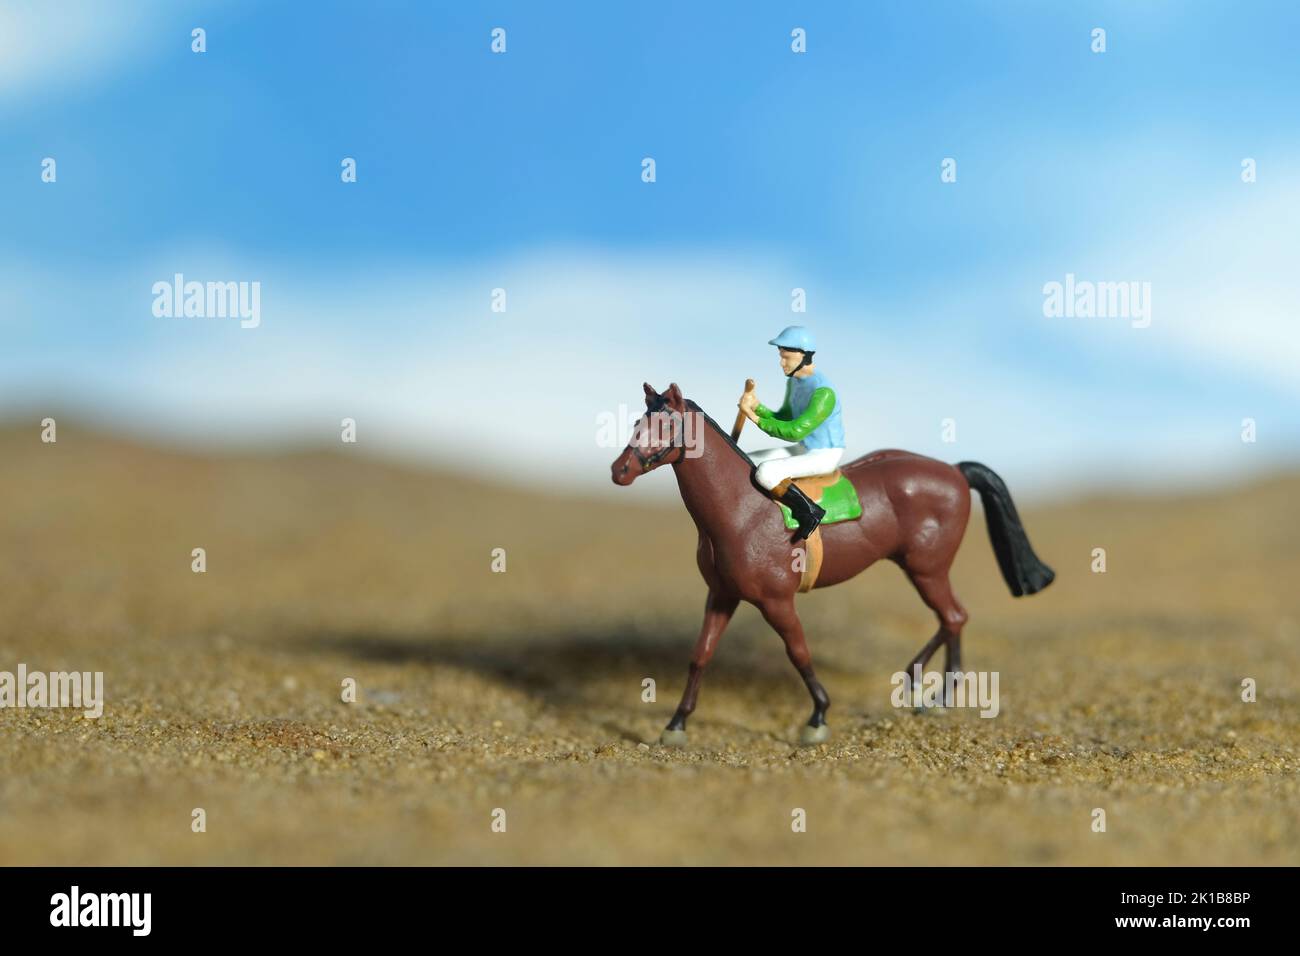 Miniature people toy figure photography. A jockey man riding horse at farm, sand desert land field. Image photo Stock Photo